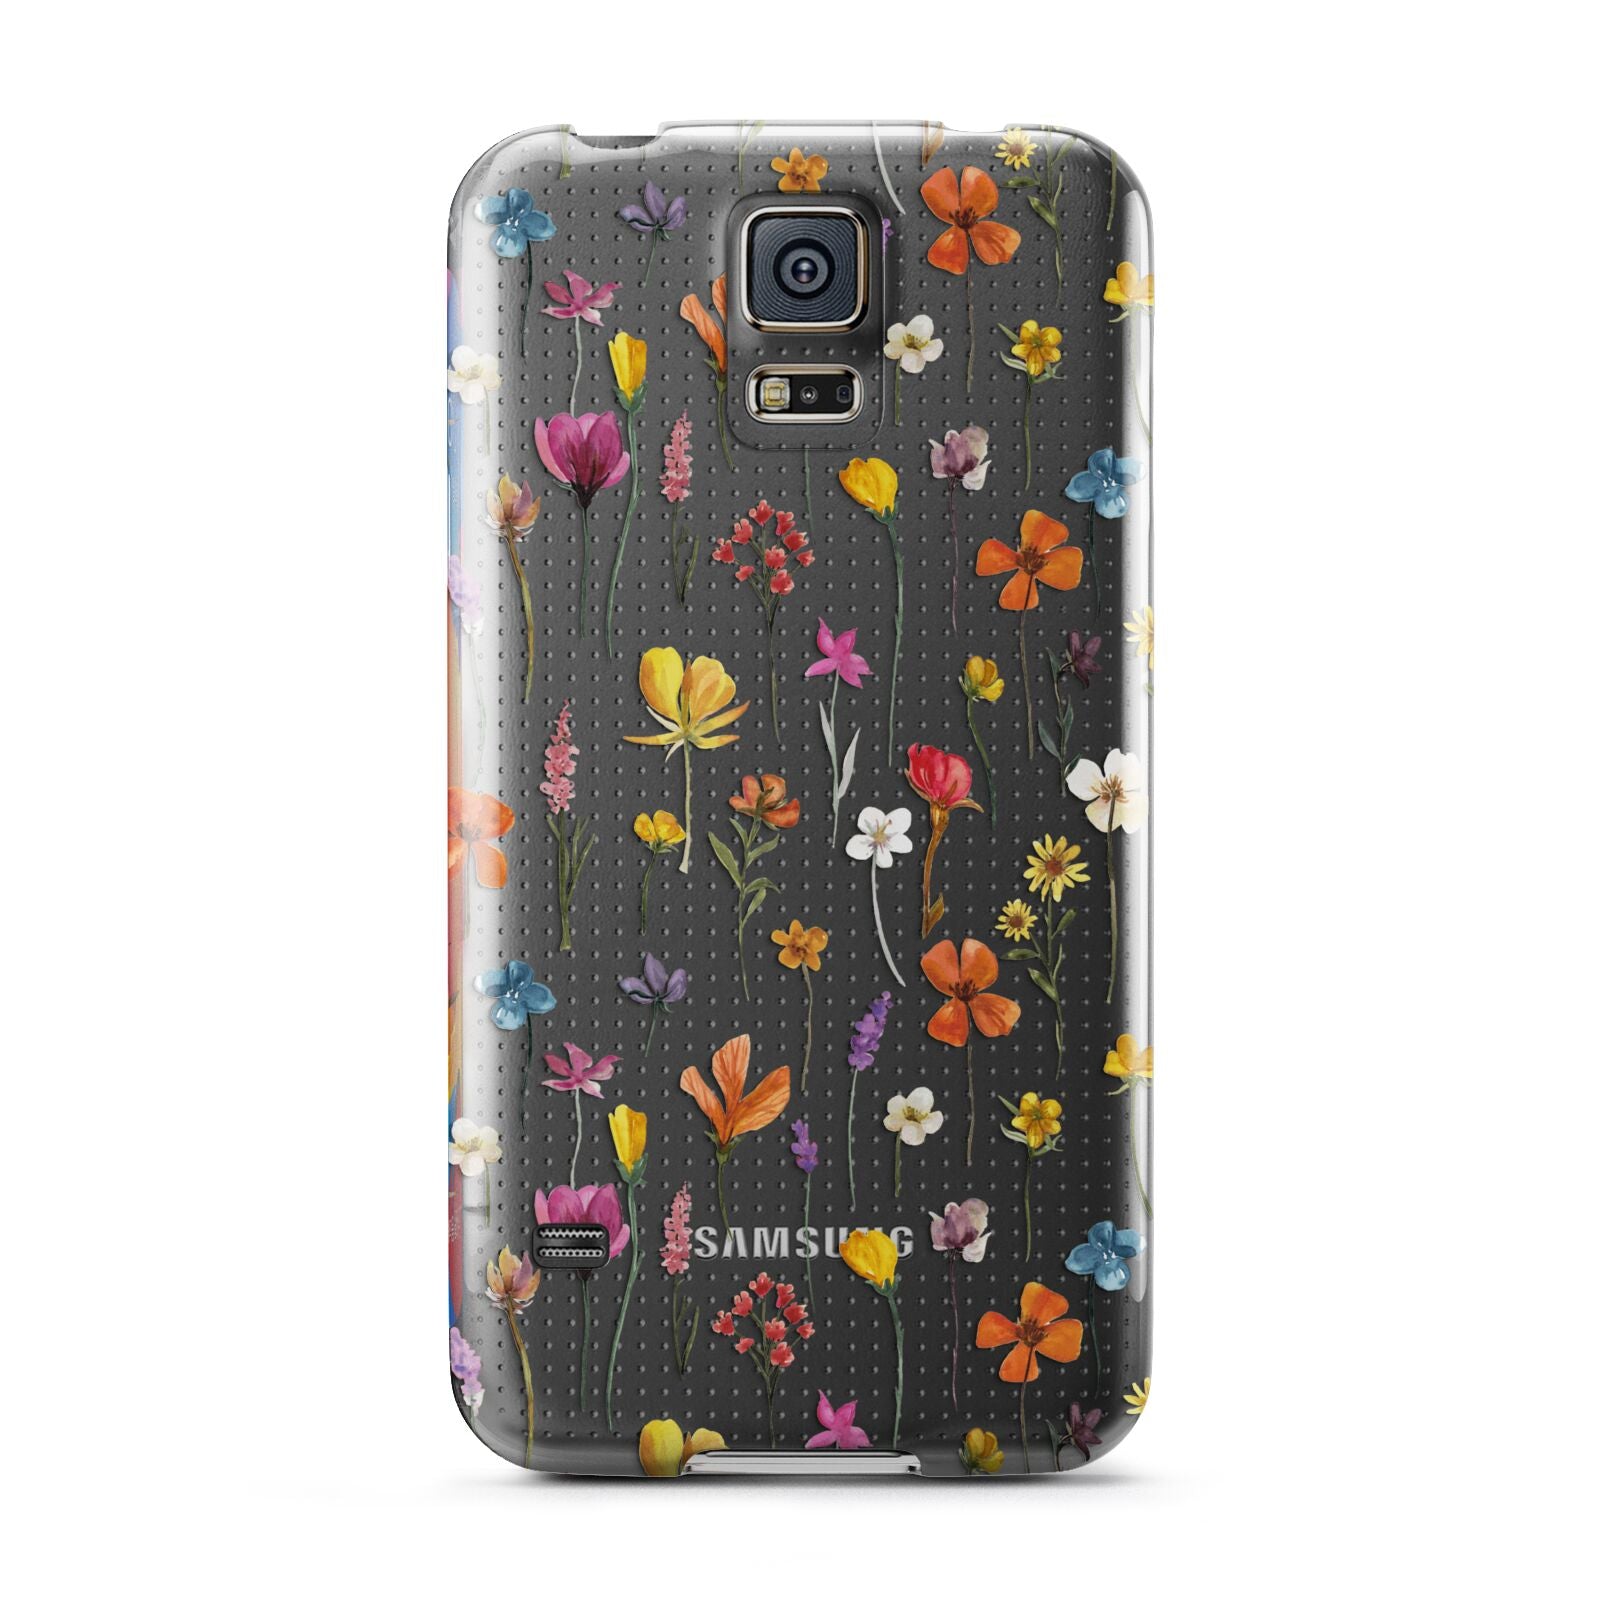 Botanical Floral Samsung Galaxy S5 Case